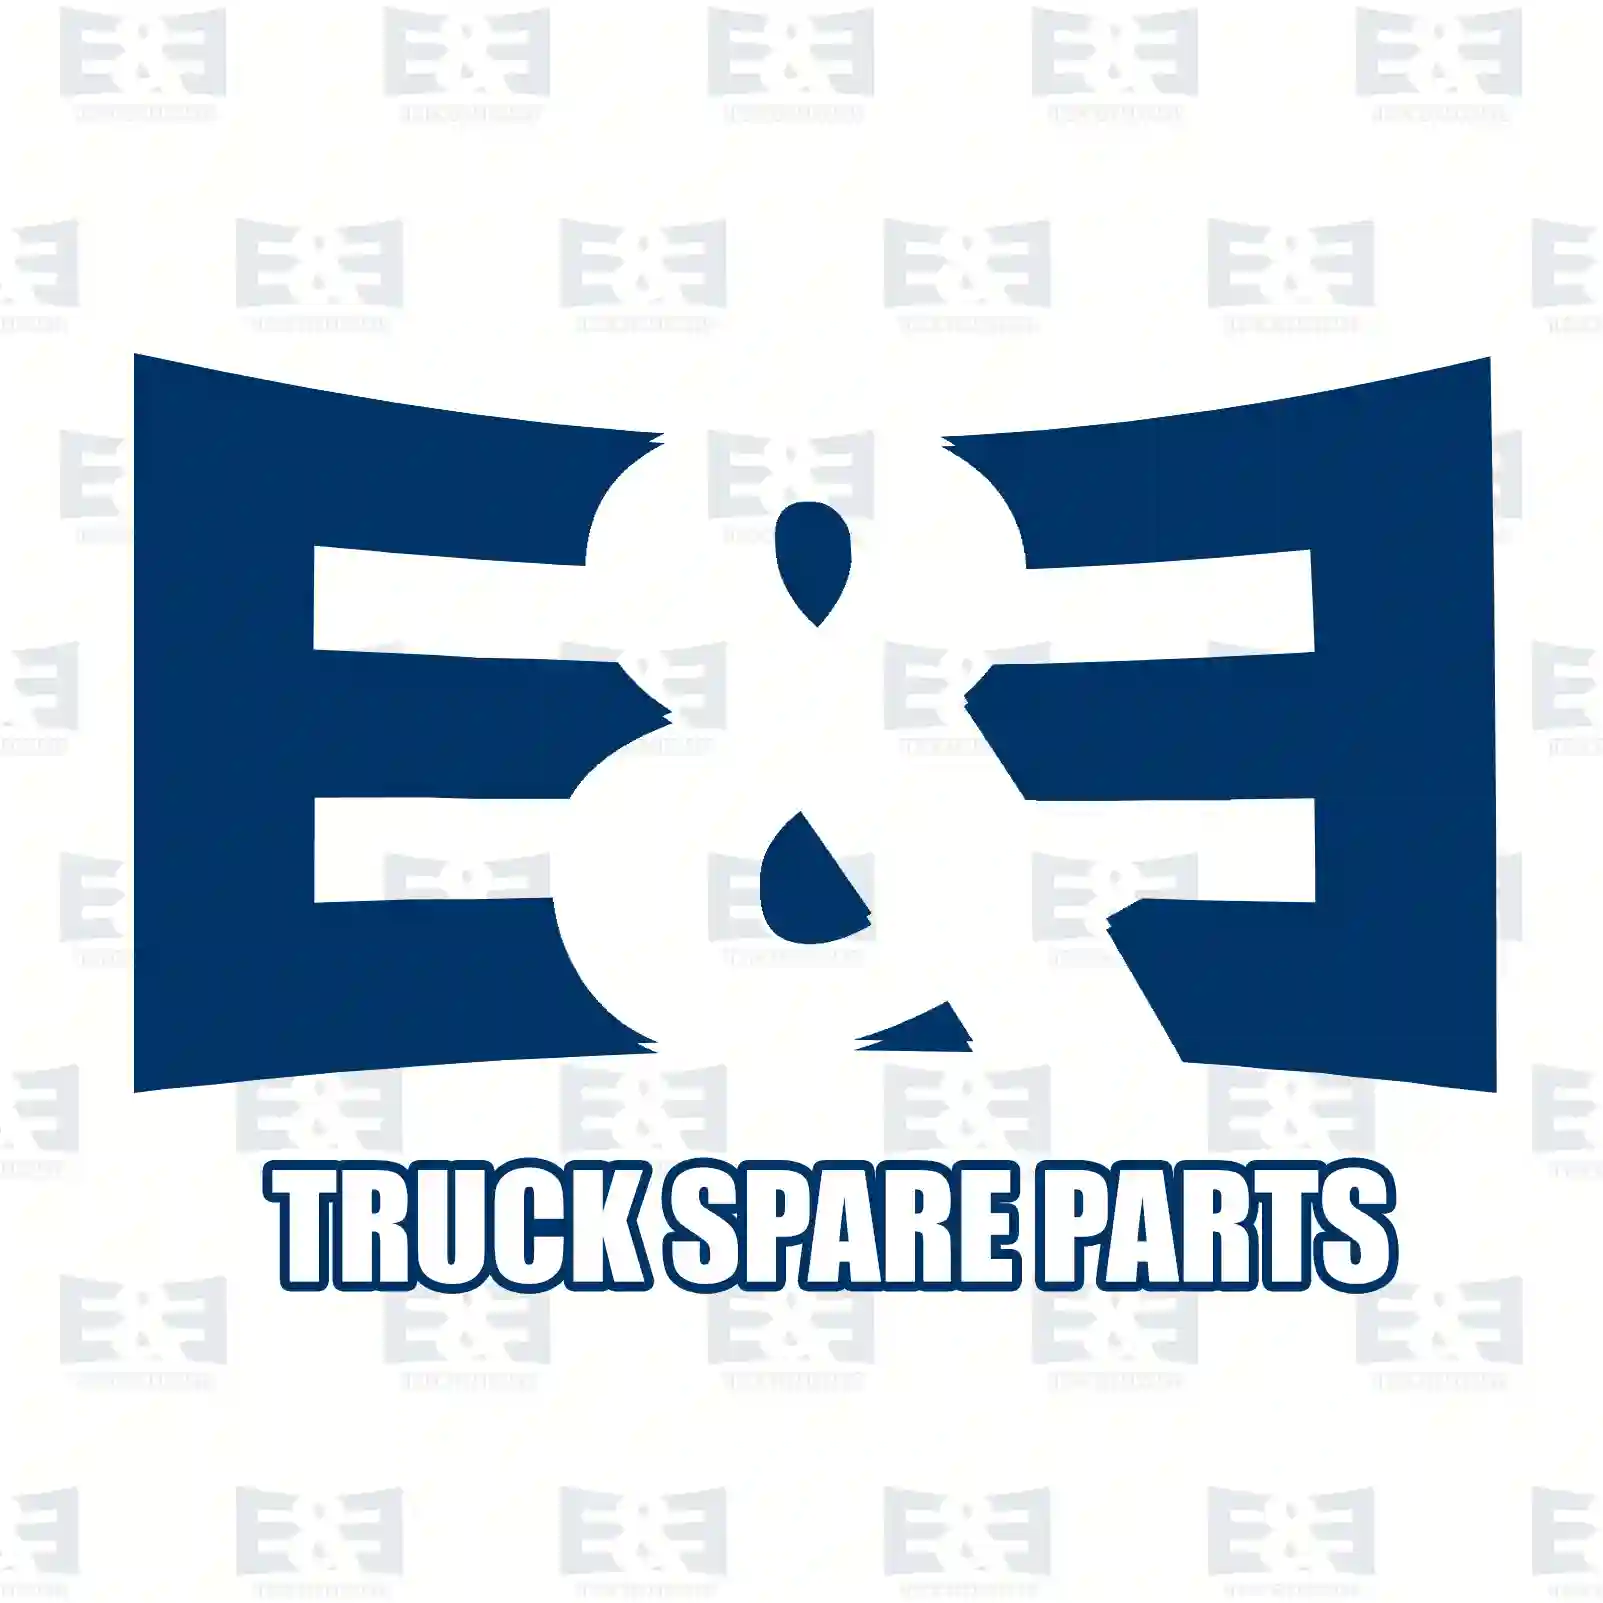 Hub Wheel bearing unit, EE No 2E2284953 ,  oem no:1735191, 7420516957, 7420518661, 7420535262, 7420819846, 7420819860, 2277946, 103444, 20517163, 20535230, 205352445, 20558966, 3987673, 3989896, 9955401 E&E Truck Spare Parts | Truck Spare Parts, Auotomotive Spare Parts